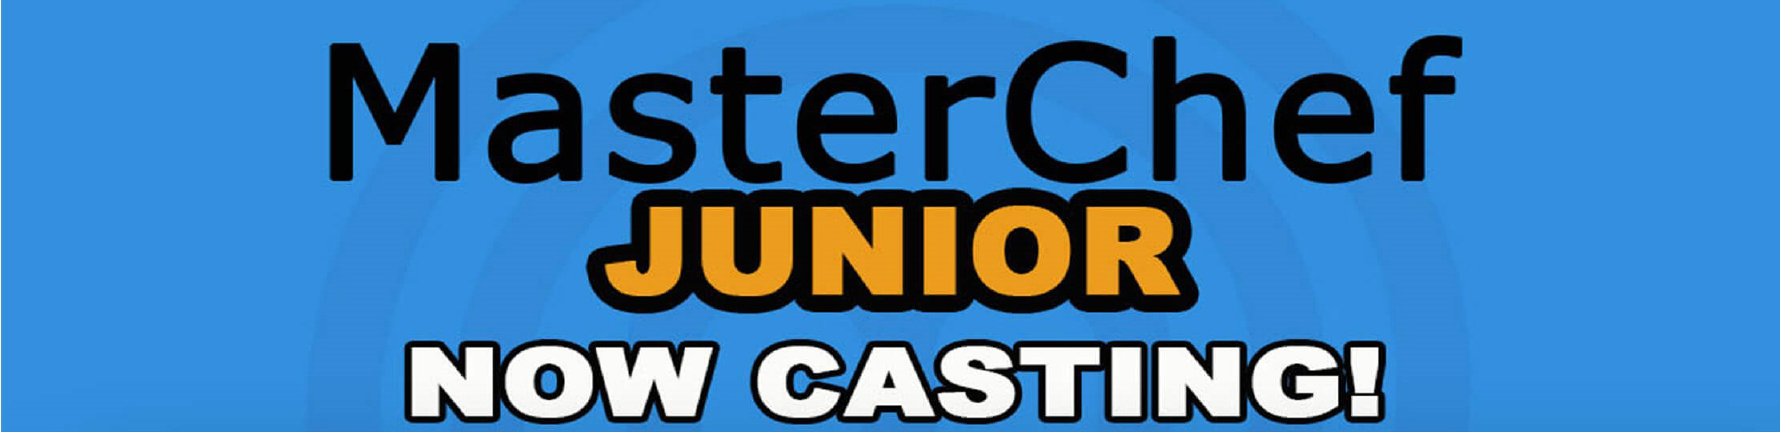 Master Chef Junior Casting Call